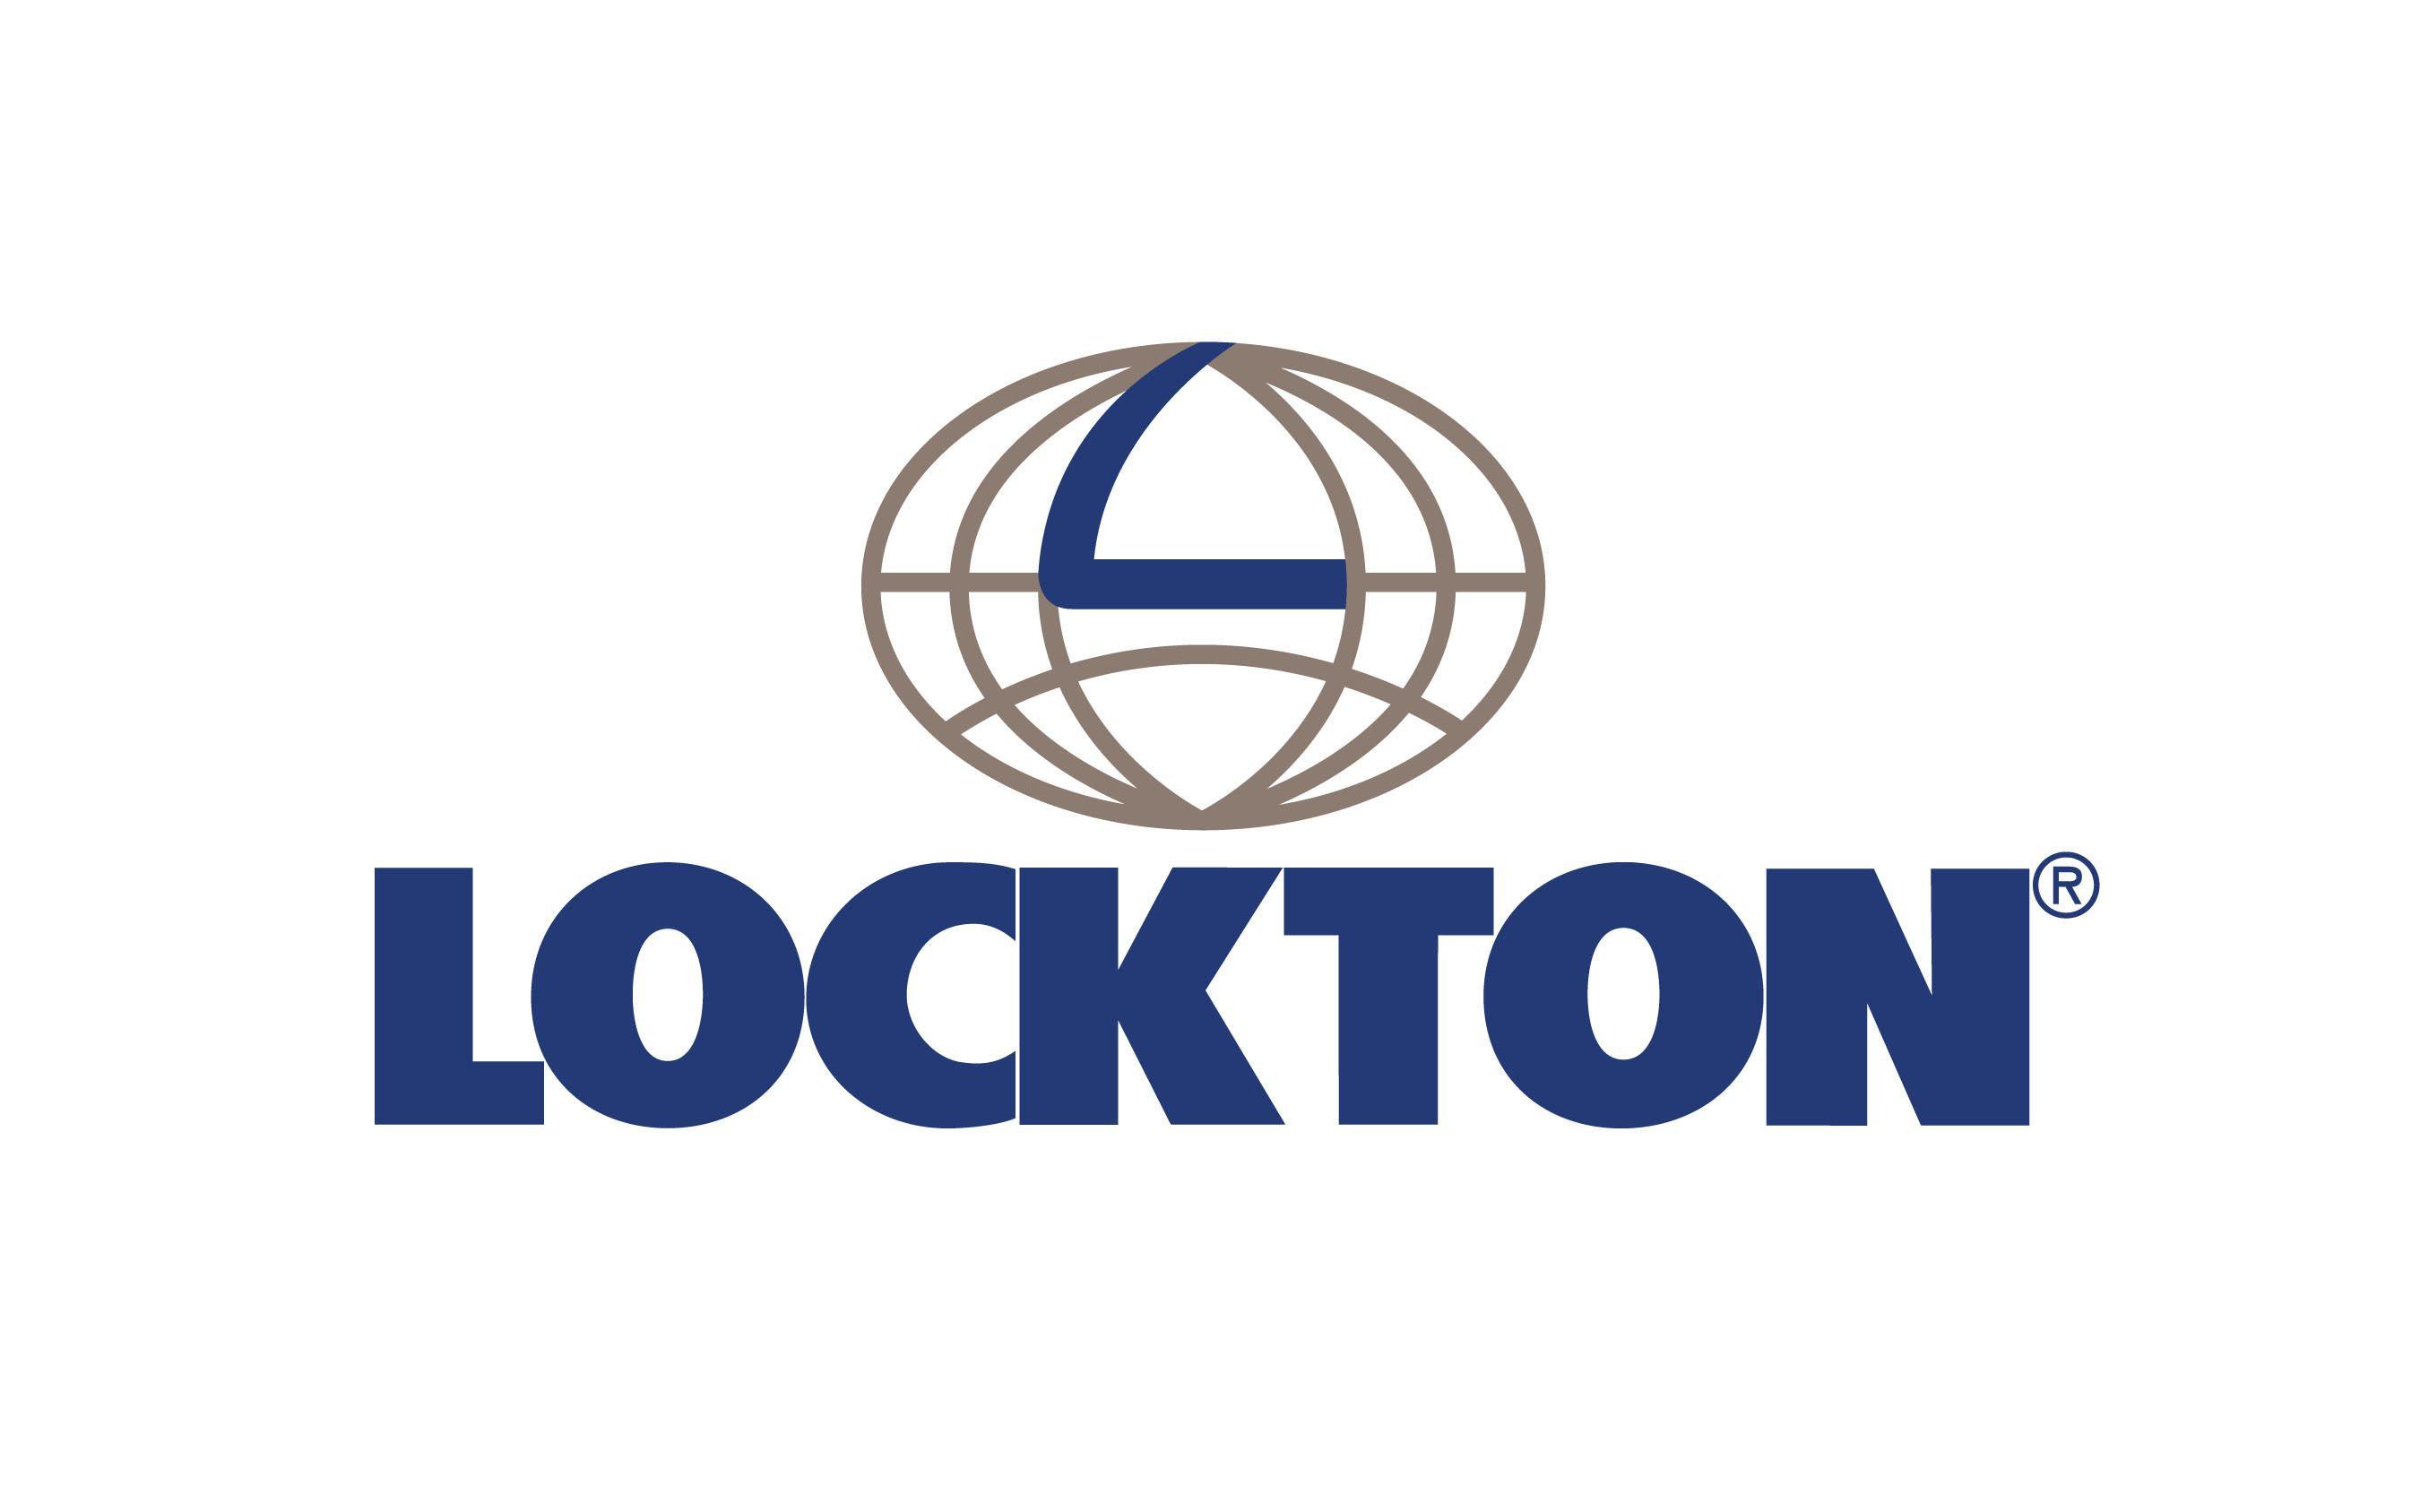 Lockton Logo - LOCKTON LOGO